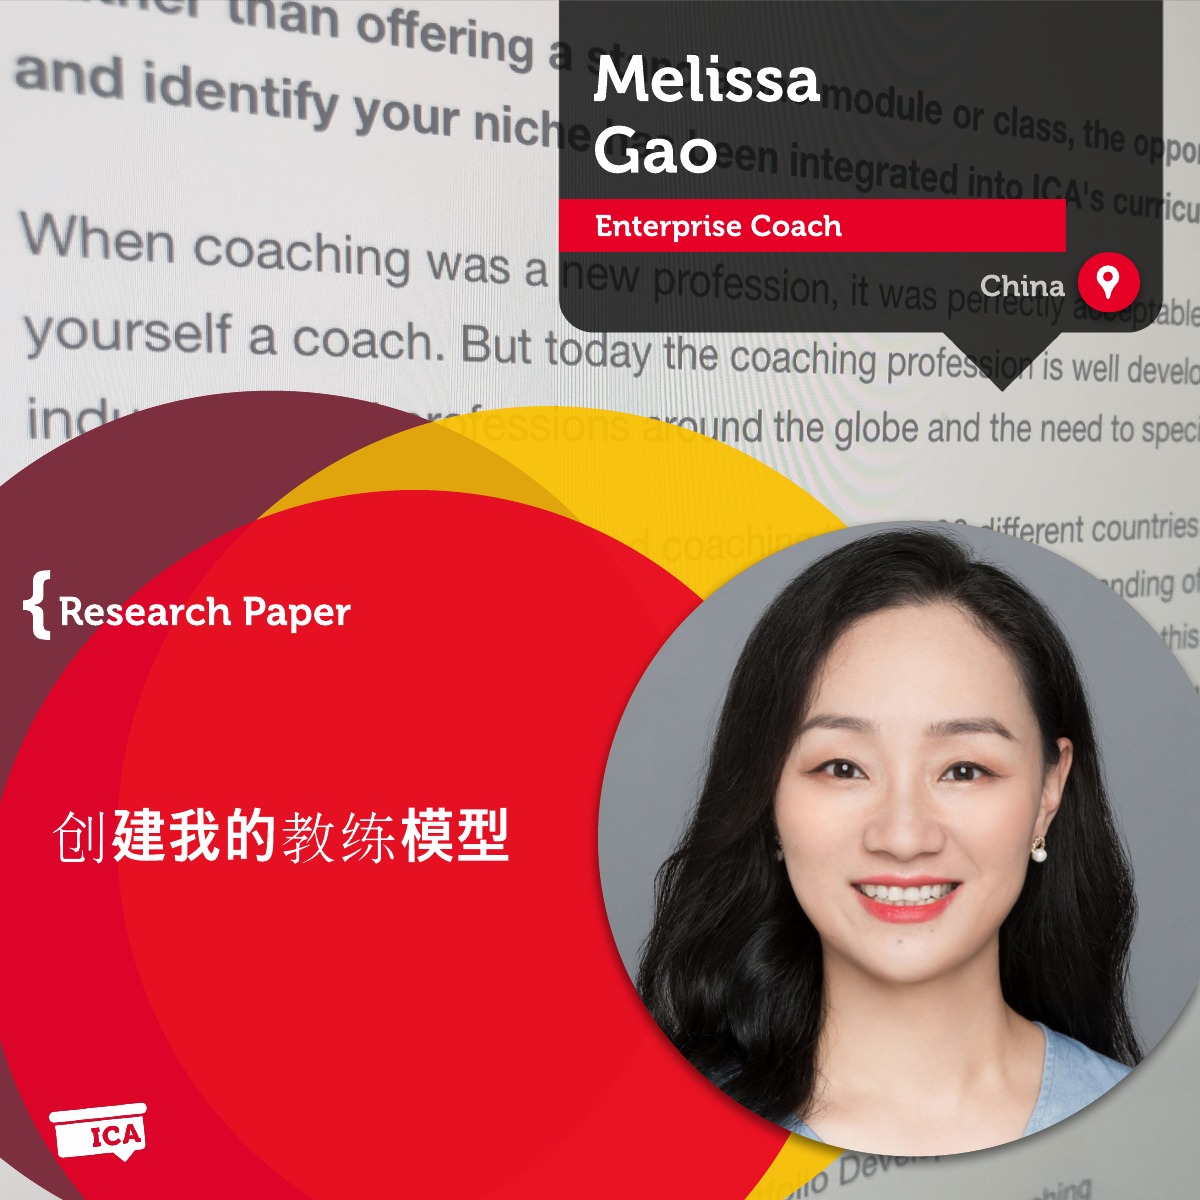 Melissa Gao Coaching Research Paper 1200